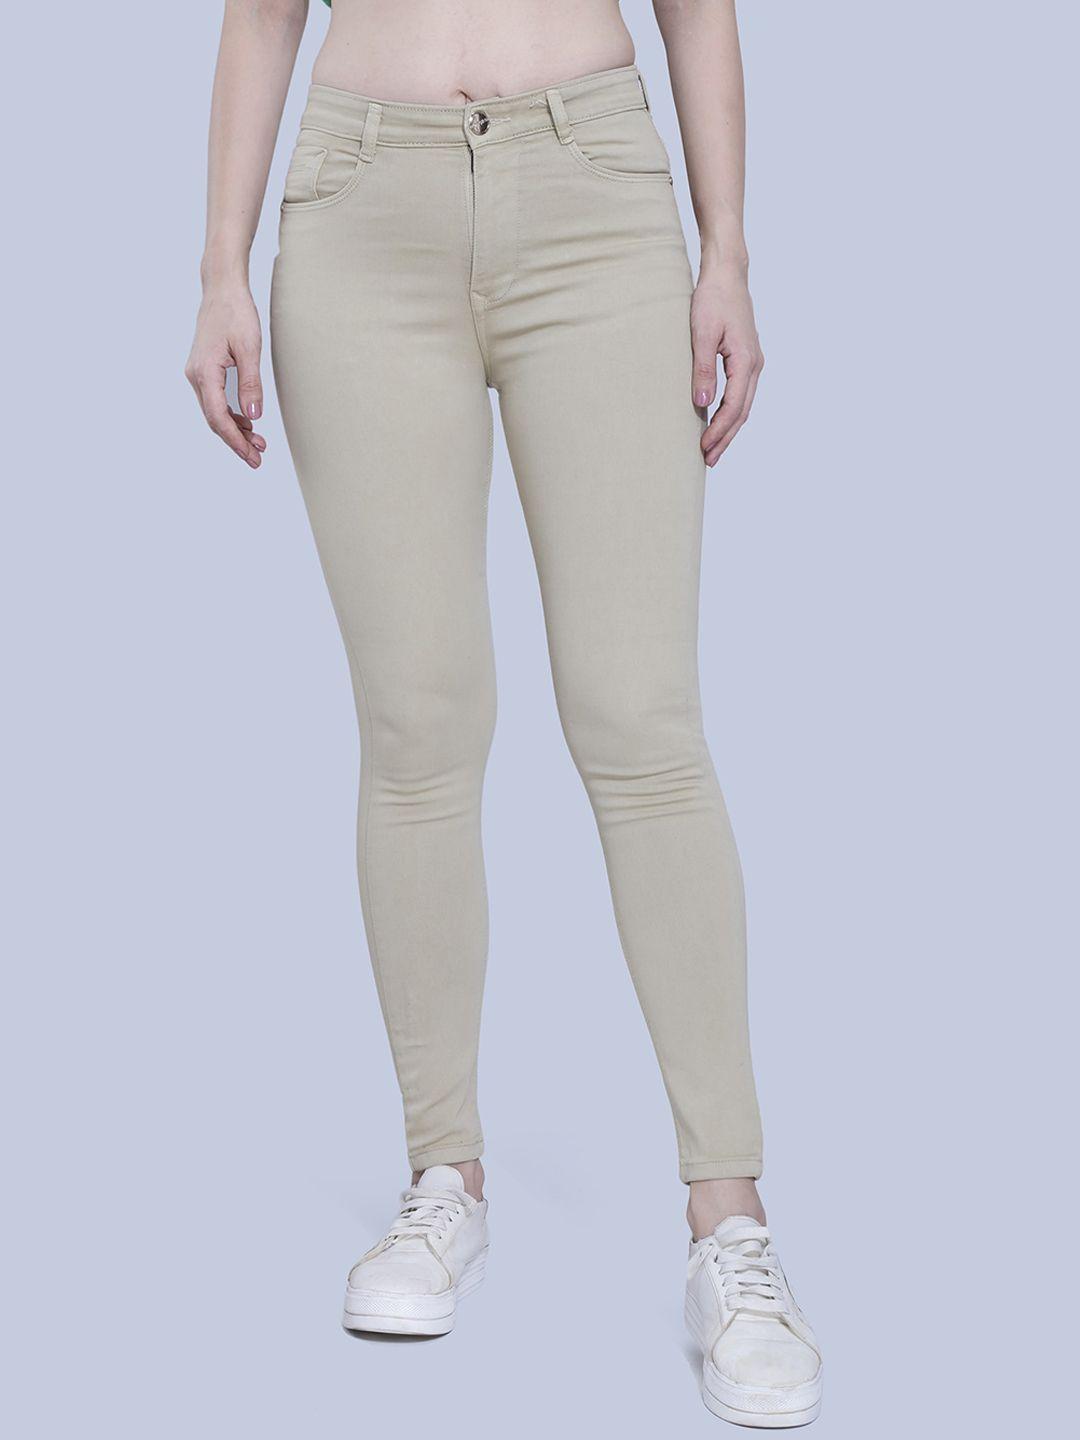 fck-3 women beige classic high-rise stretchable jeans